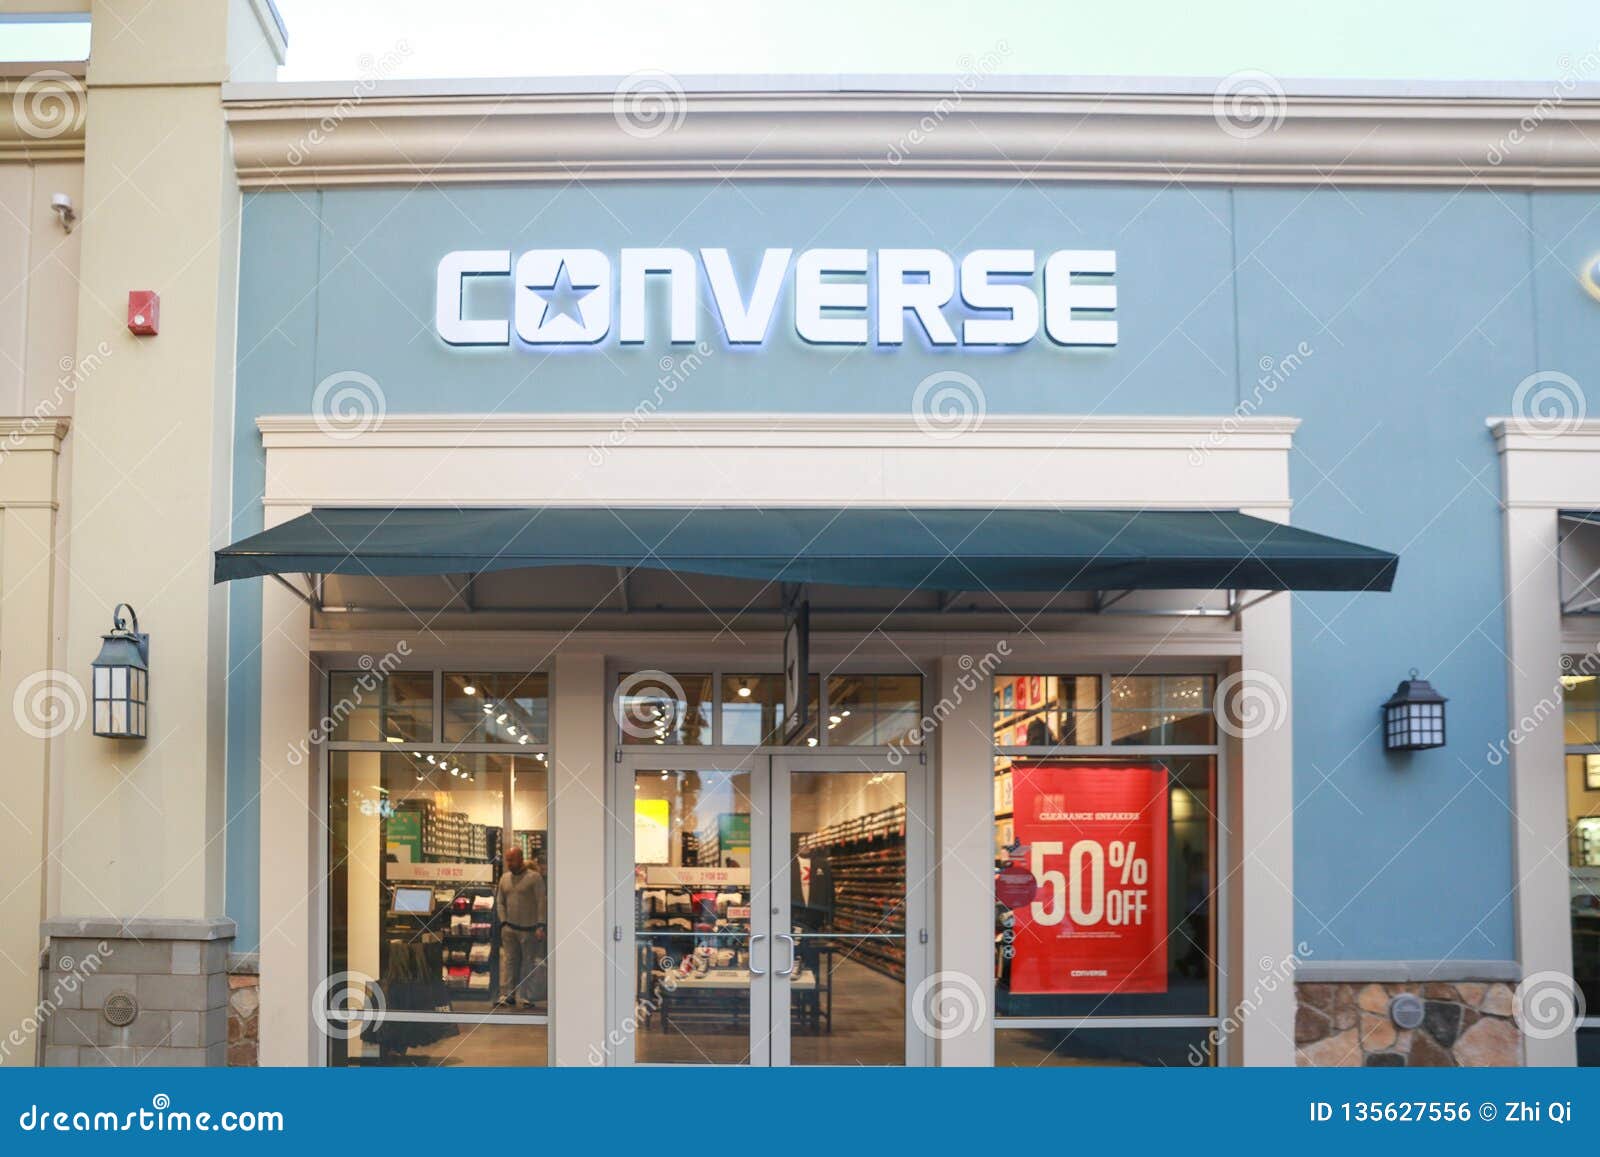 converse store 1